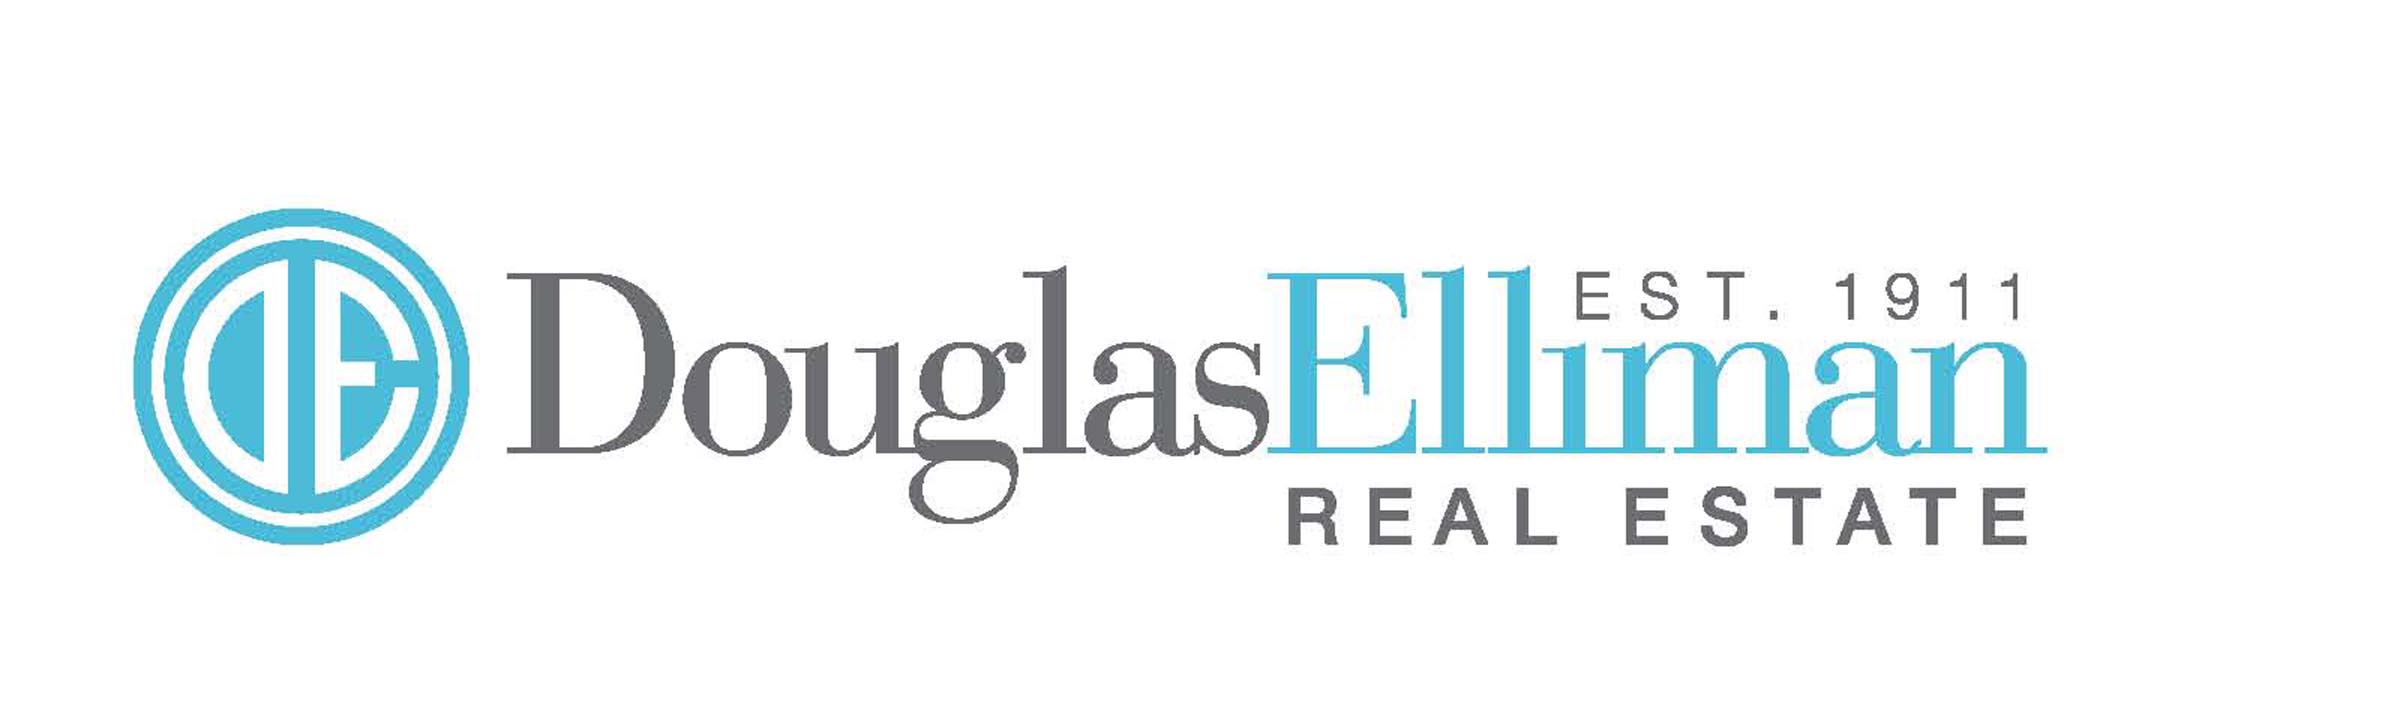 Douglas-Elliman-logo.jpg